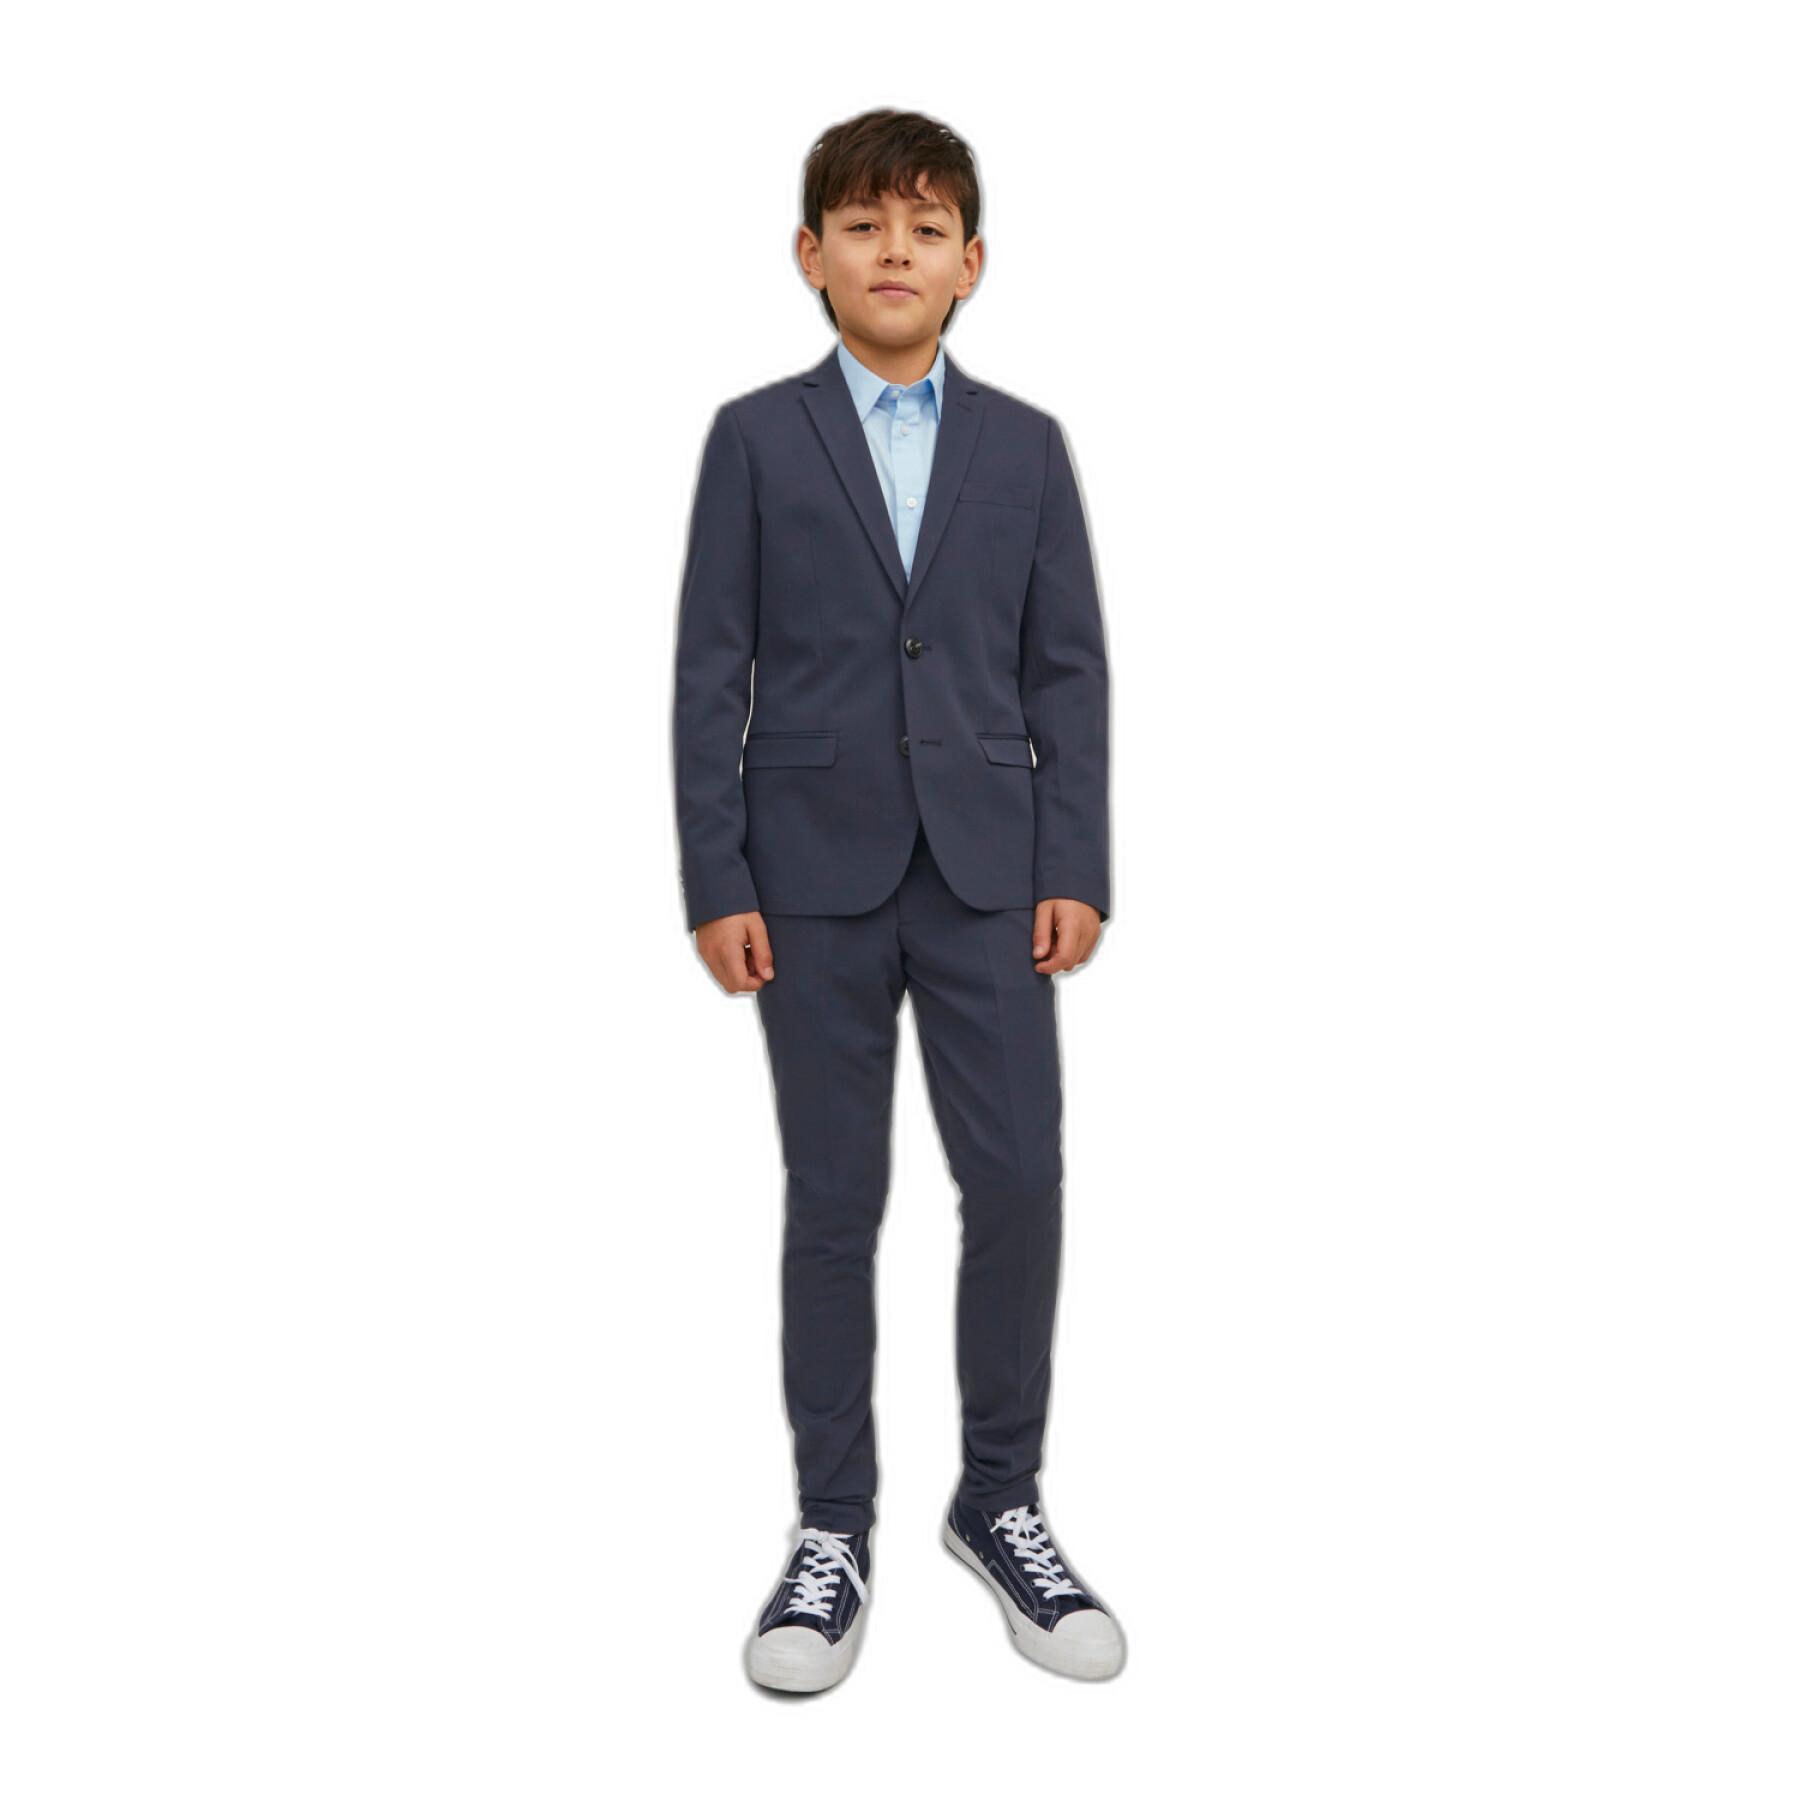 Children's suit pants Jack & Jones Solar